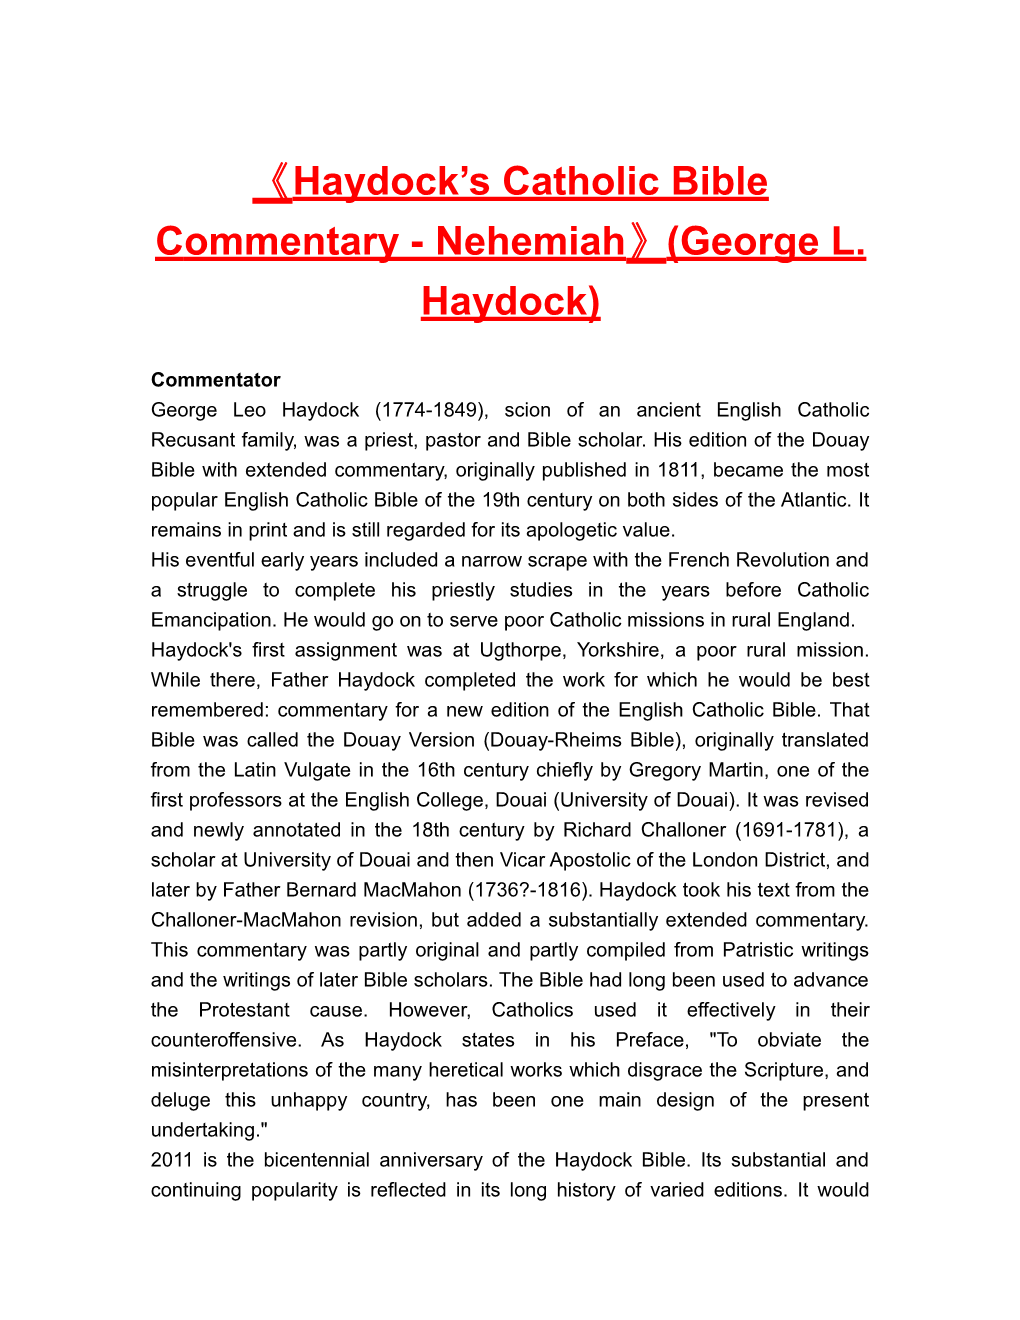 Haydock Scatholic Bible Commentary-Nehemiah (George L. Haydock)